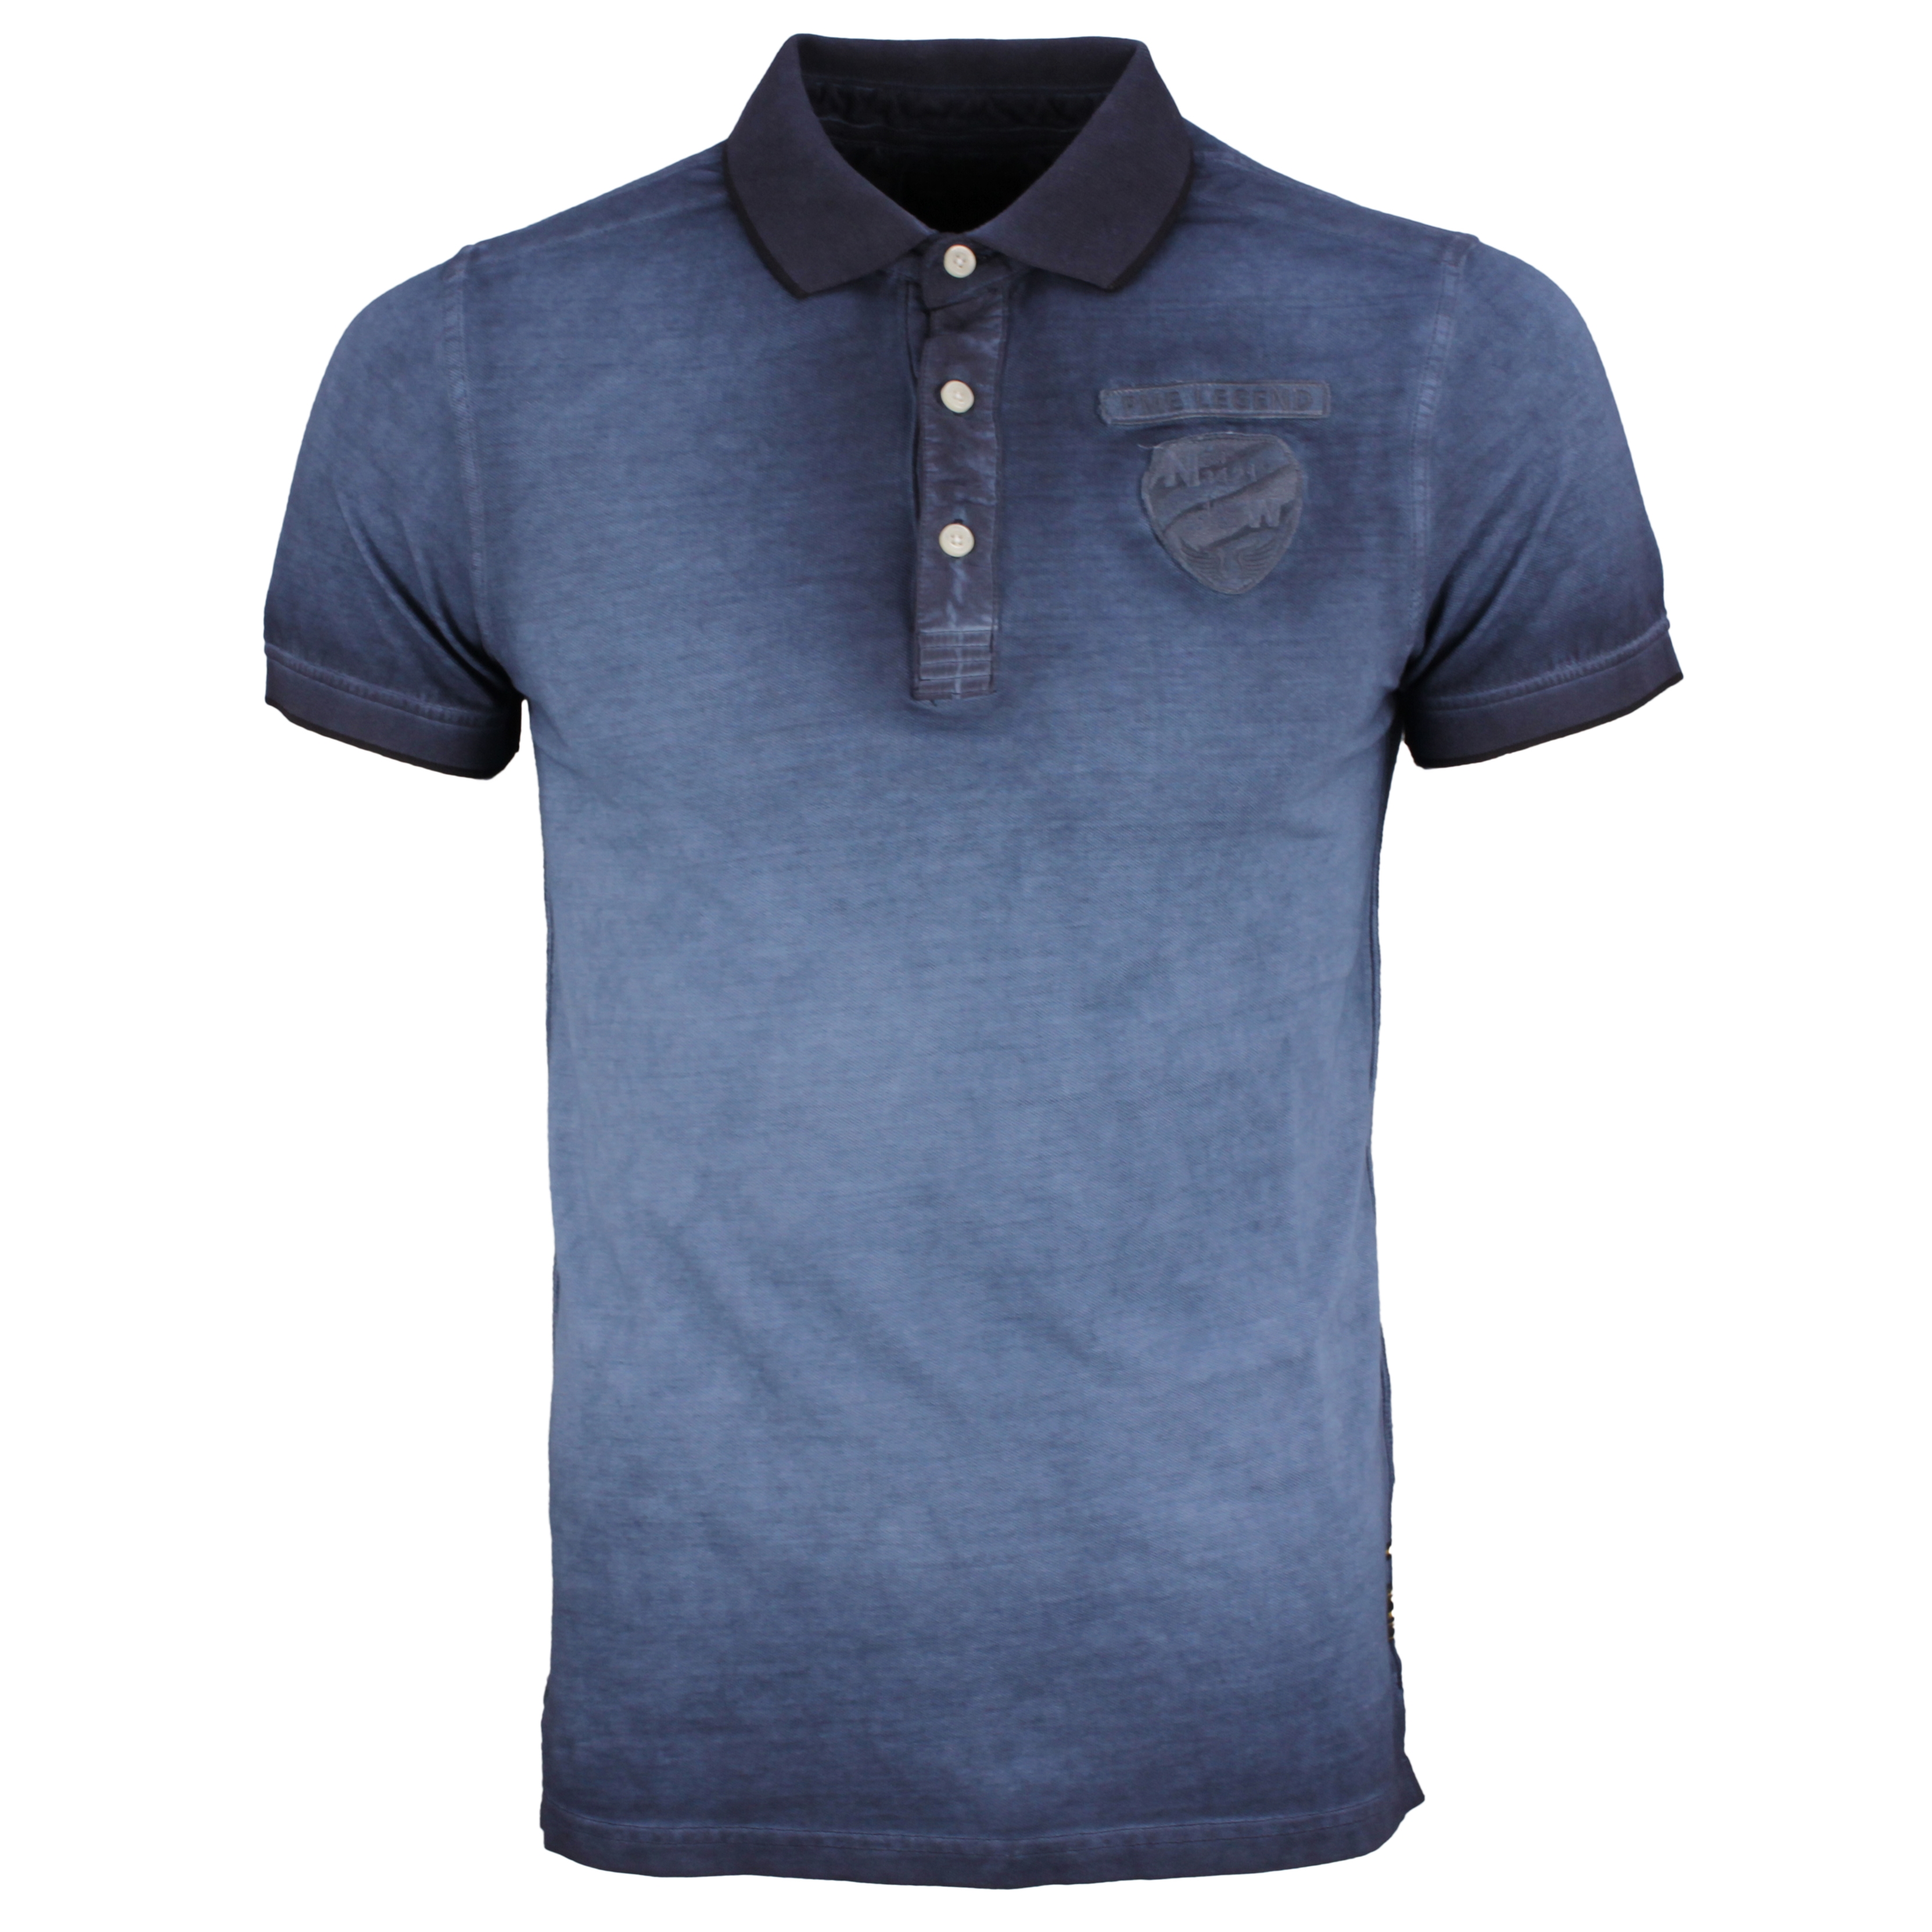 PME Legend Polo Shirt Light Pique Cold blau PPSS203860 5287